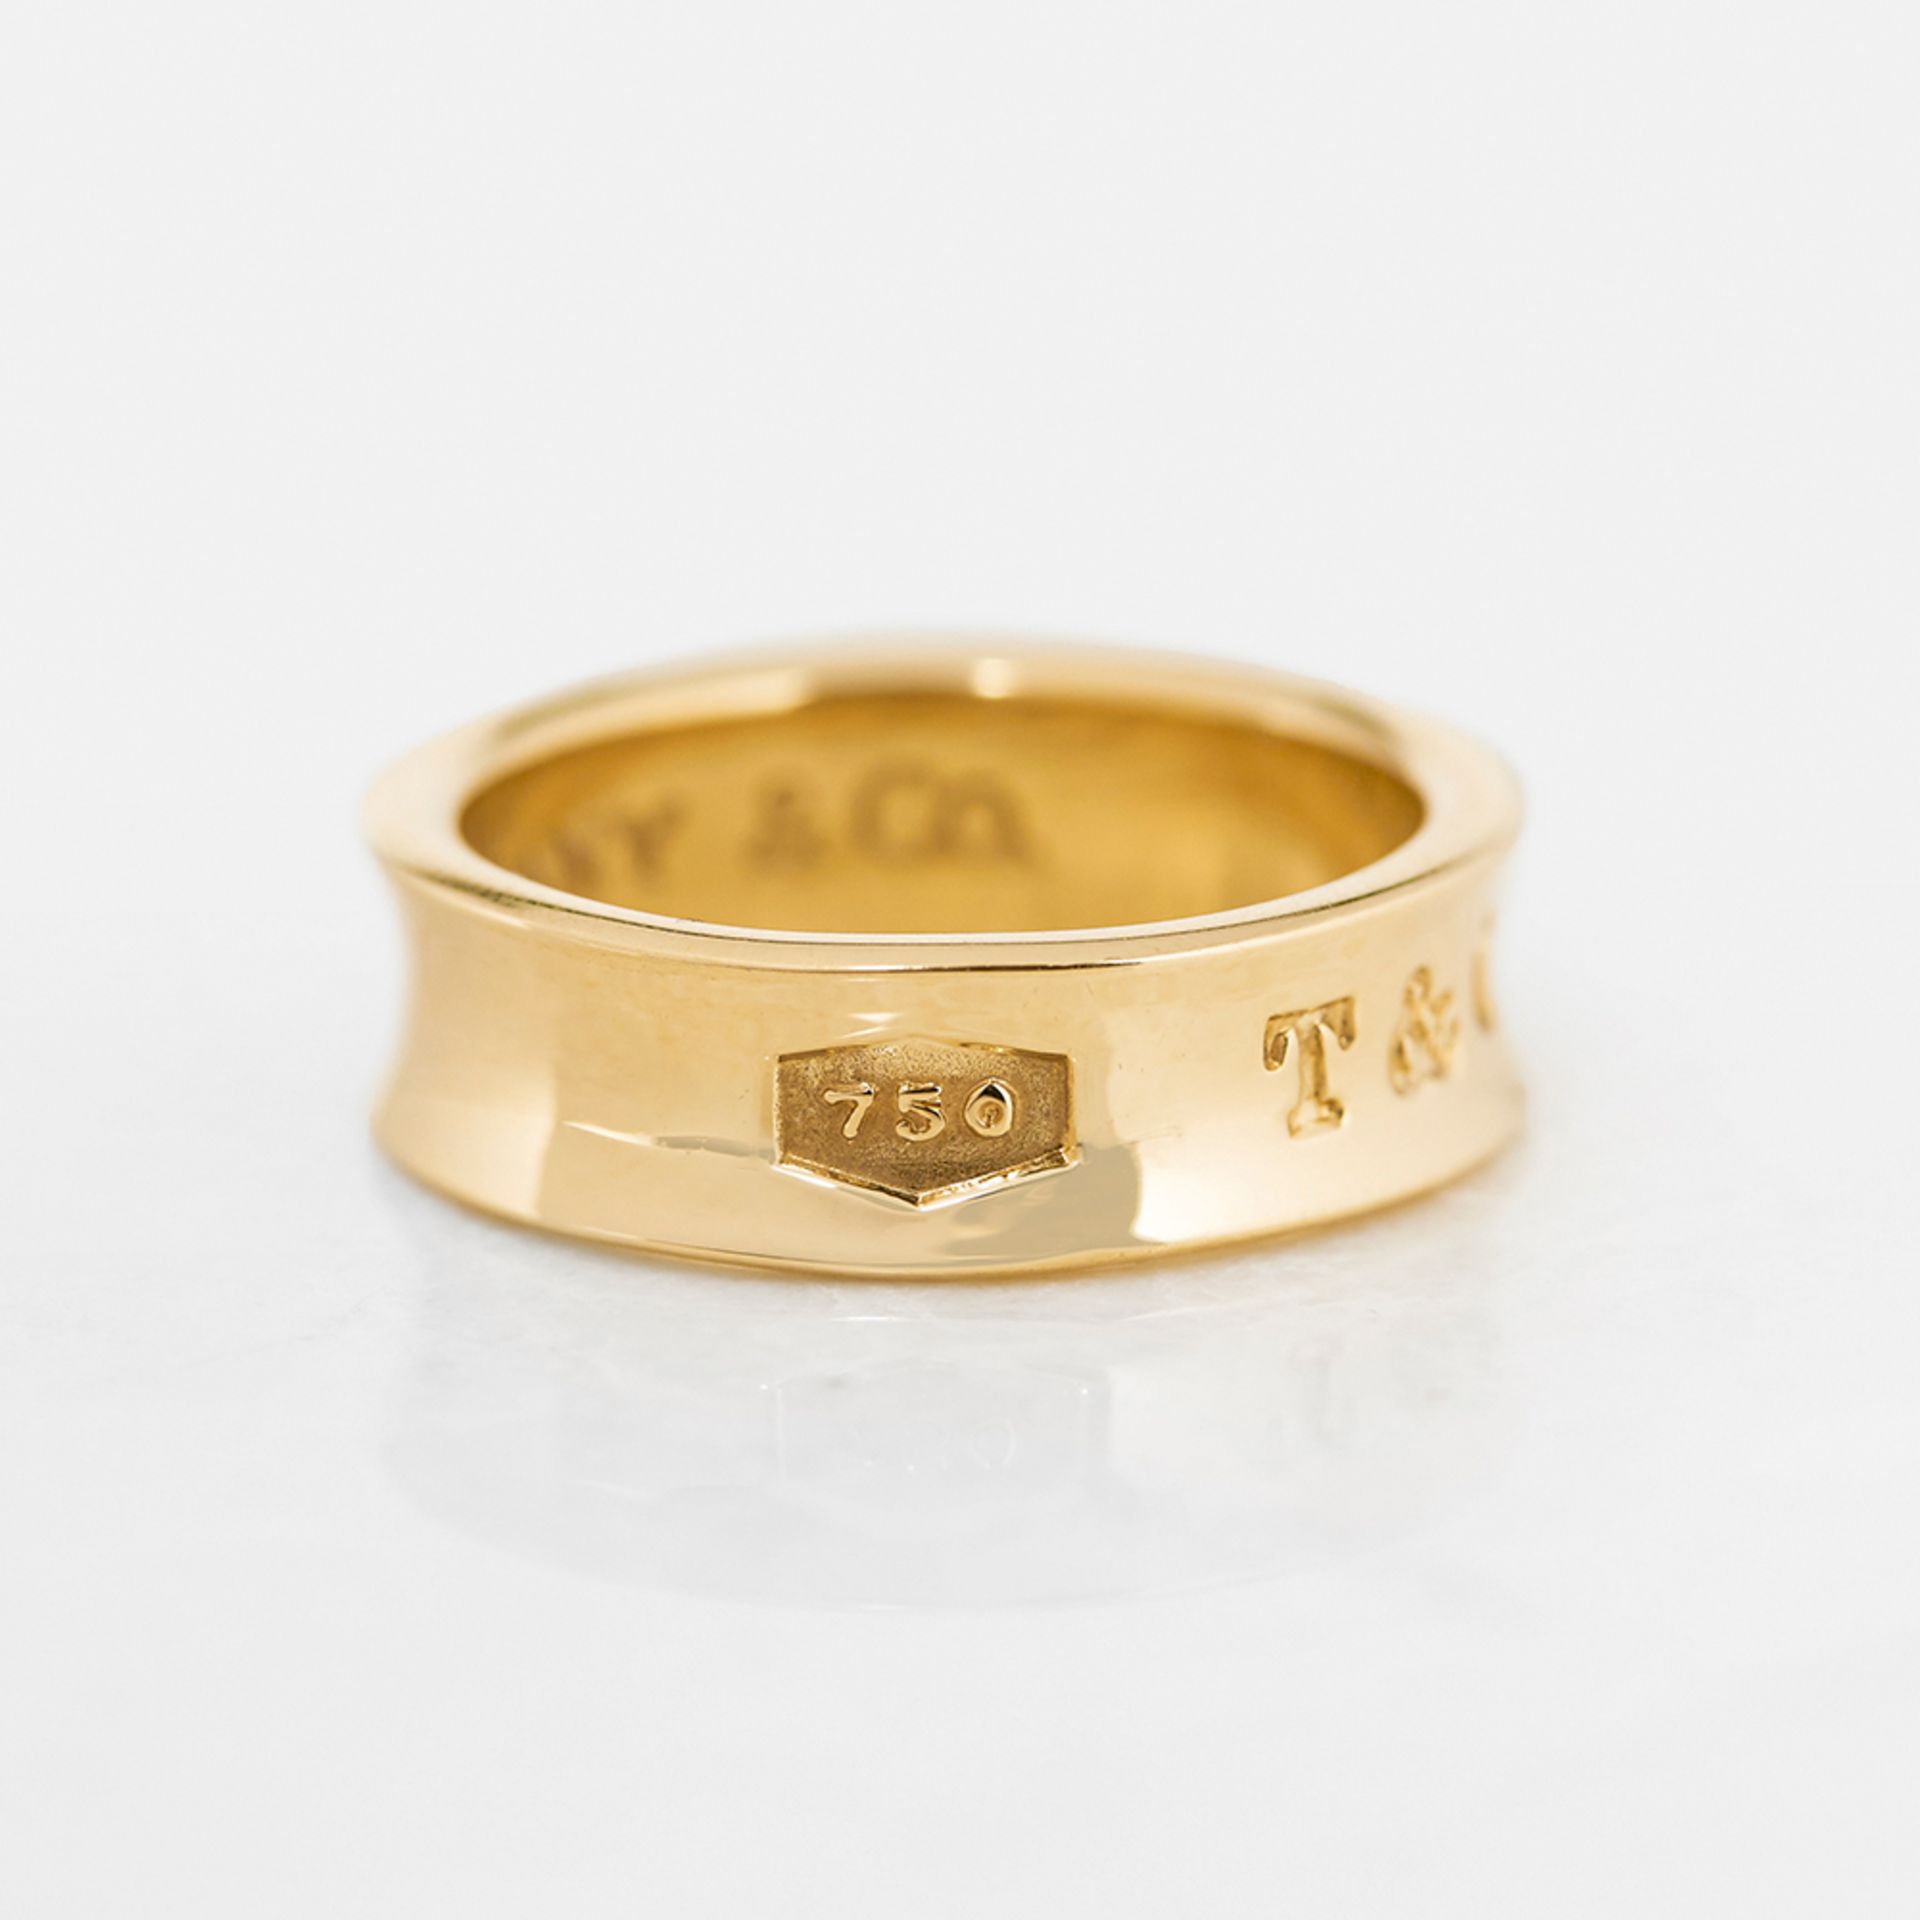 Tiffany & Co. 18k Yellow Gold Tiffany 1837 Ring - Image 3 of 8